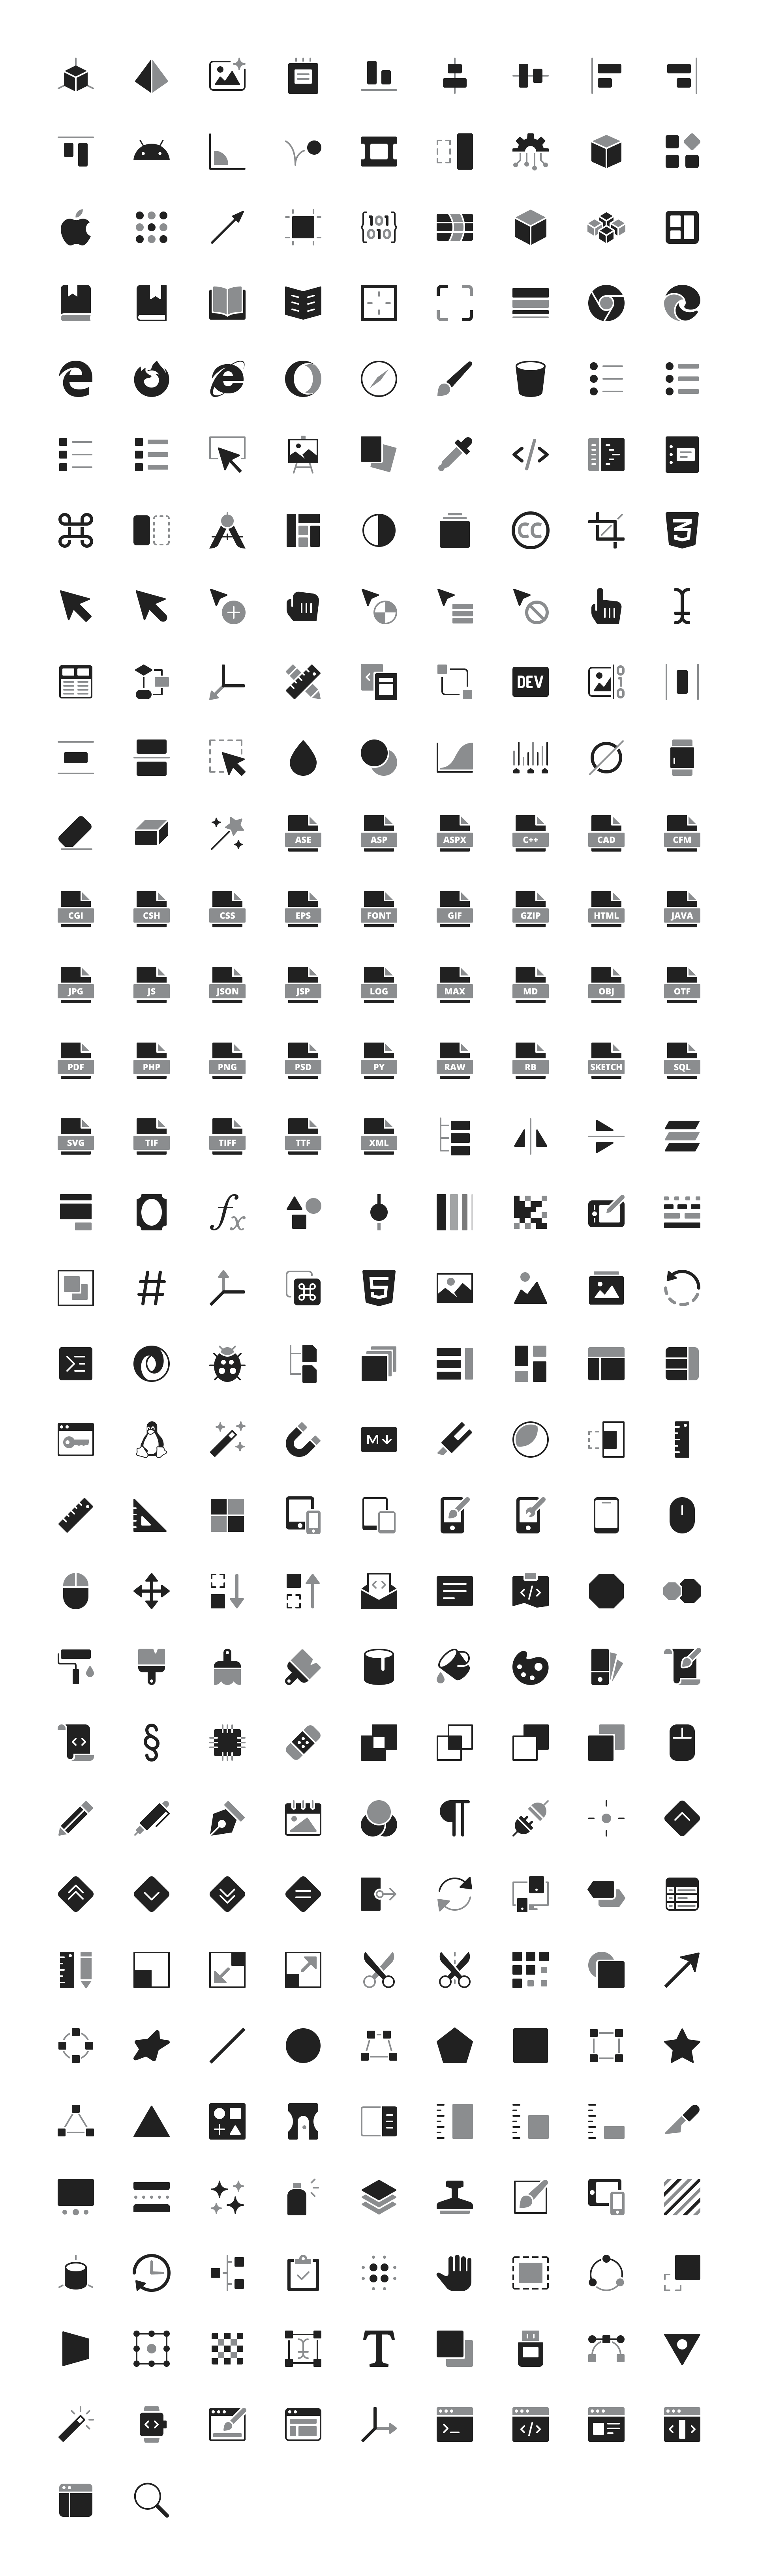 Design and Development Icons